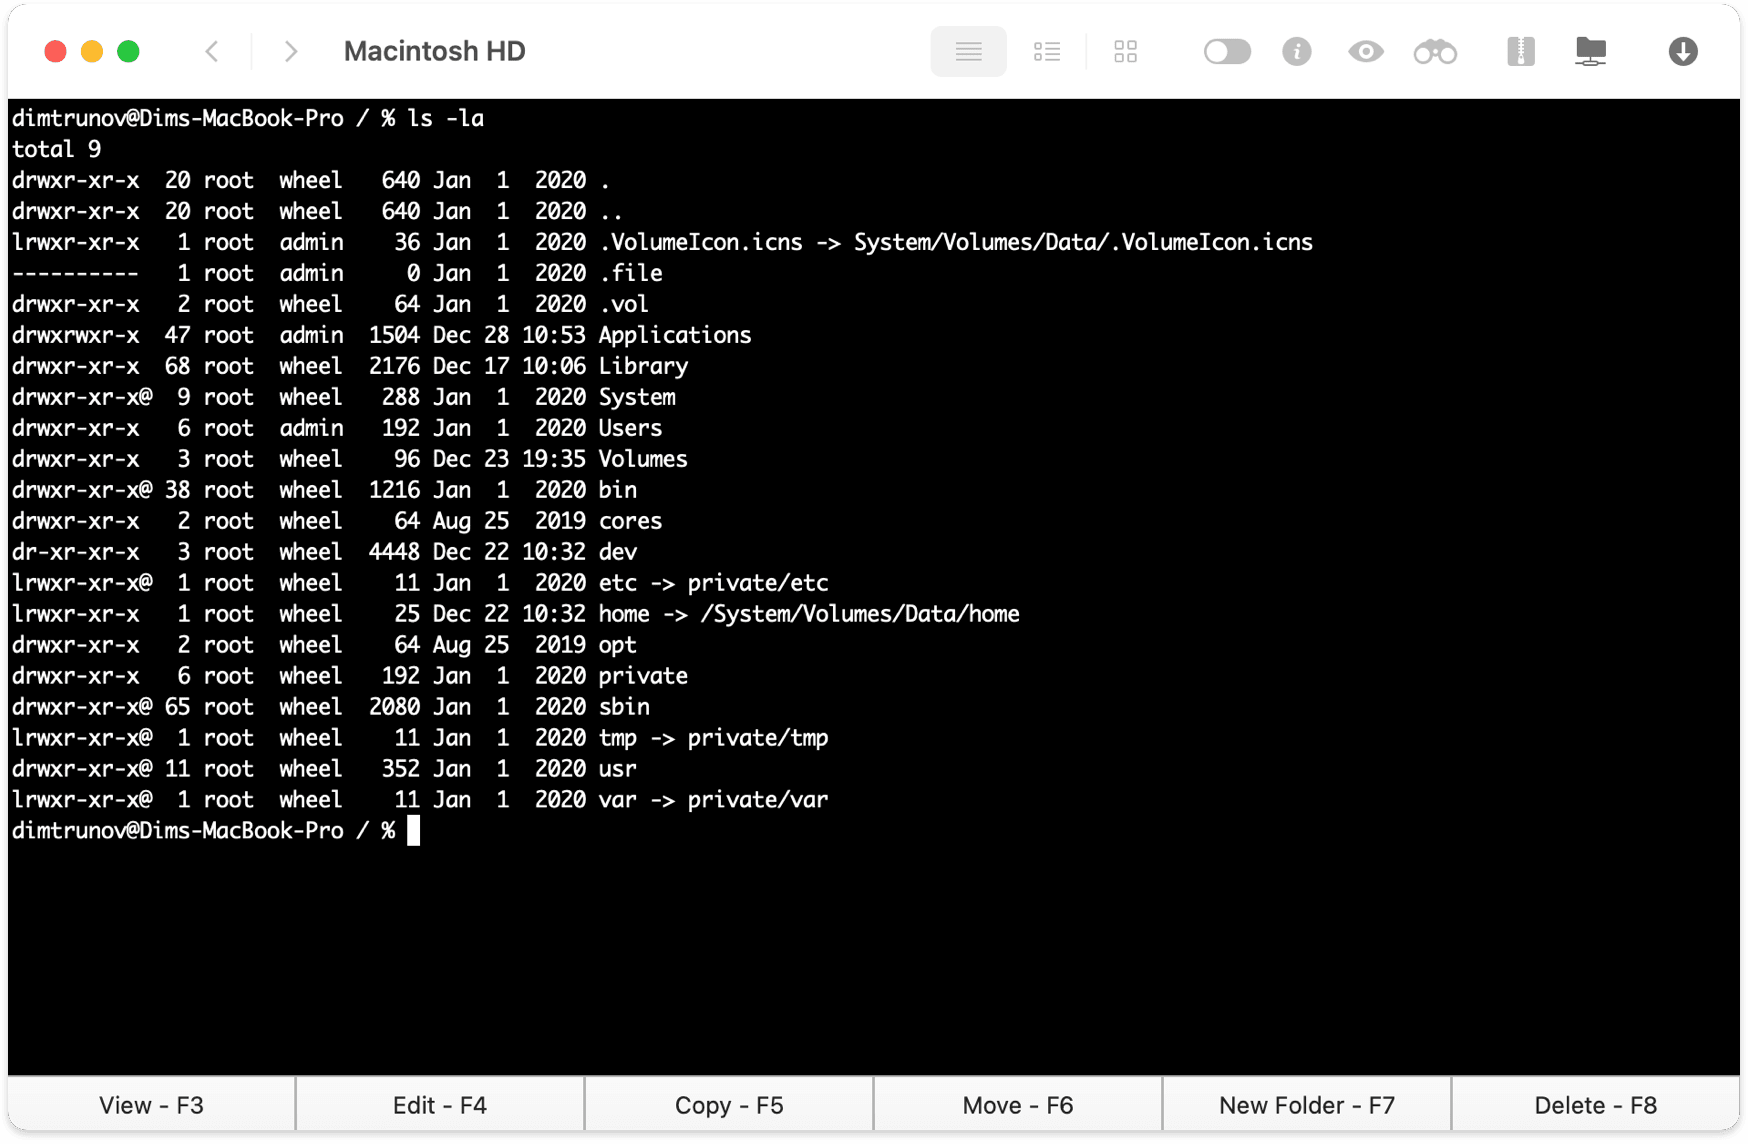 mac terminal emulator